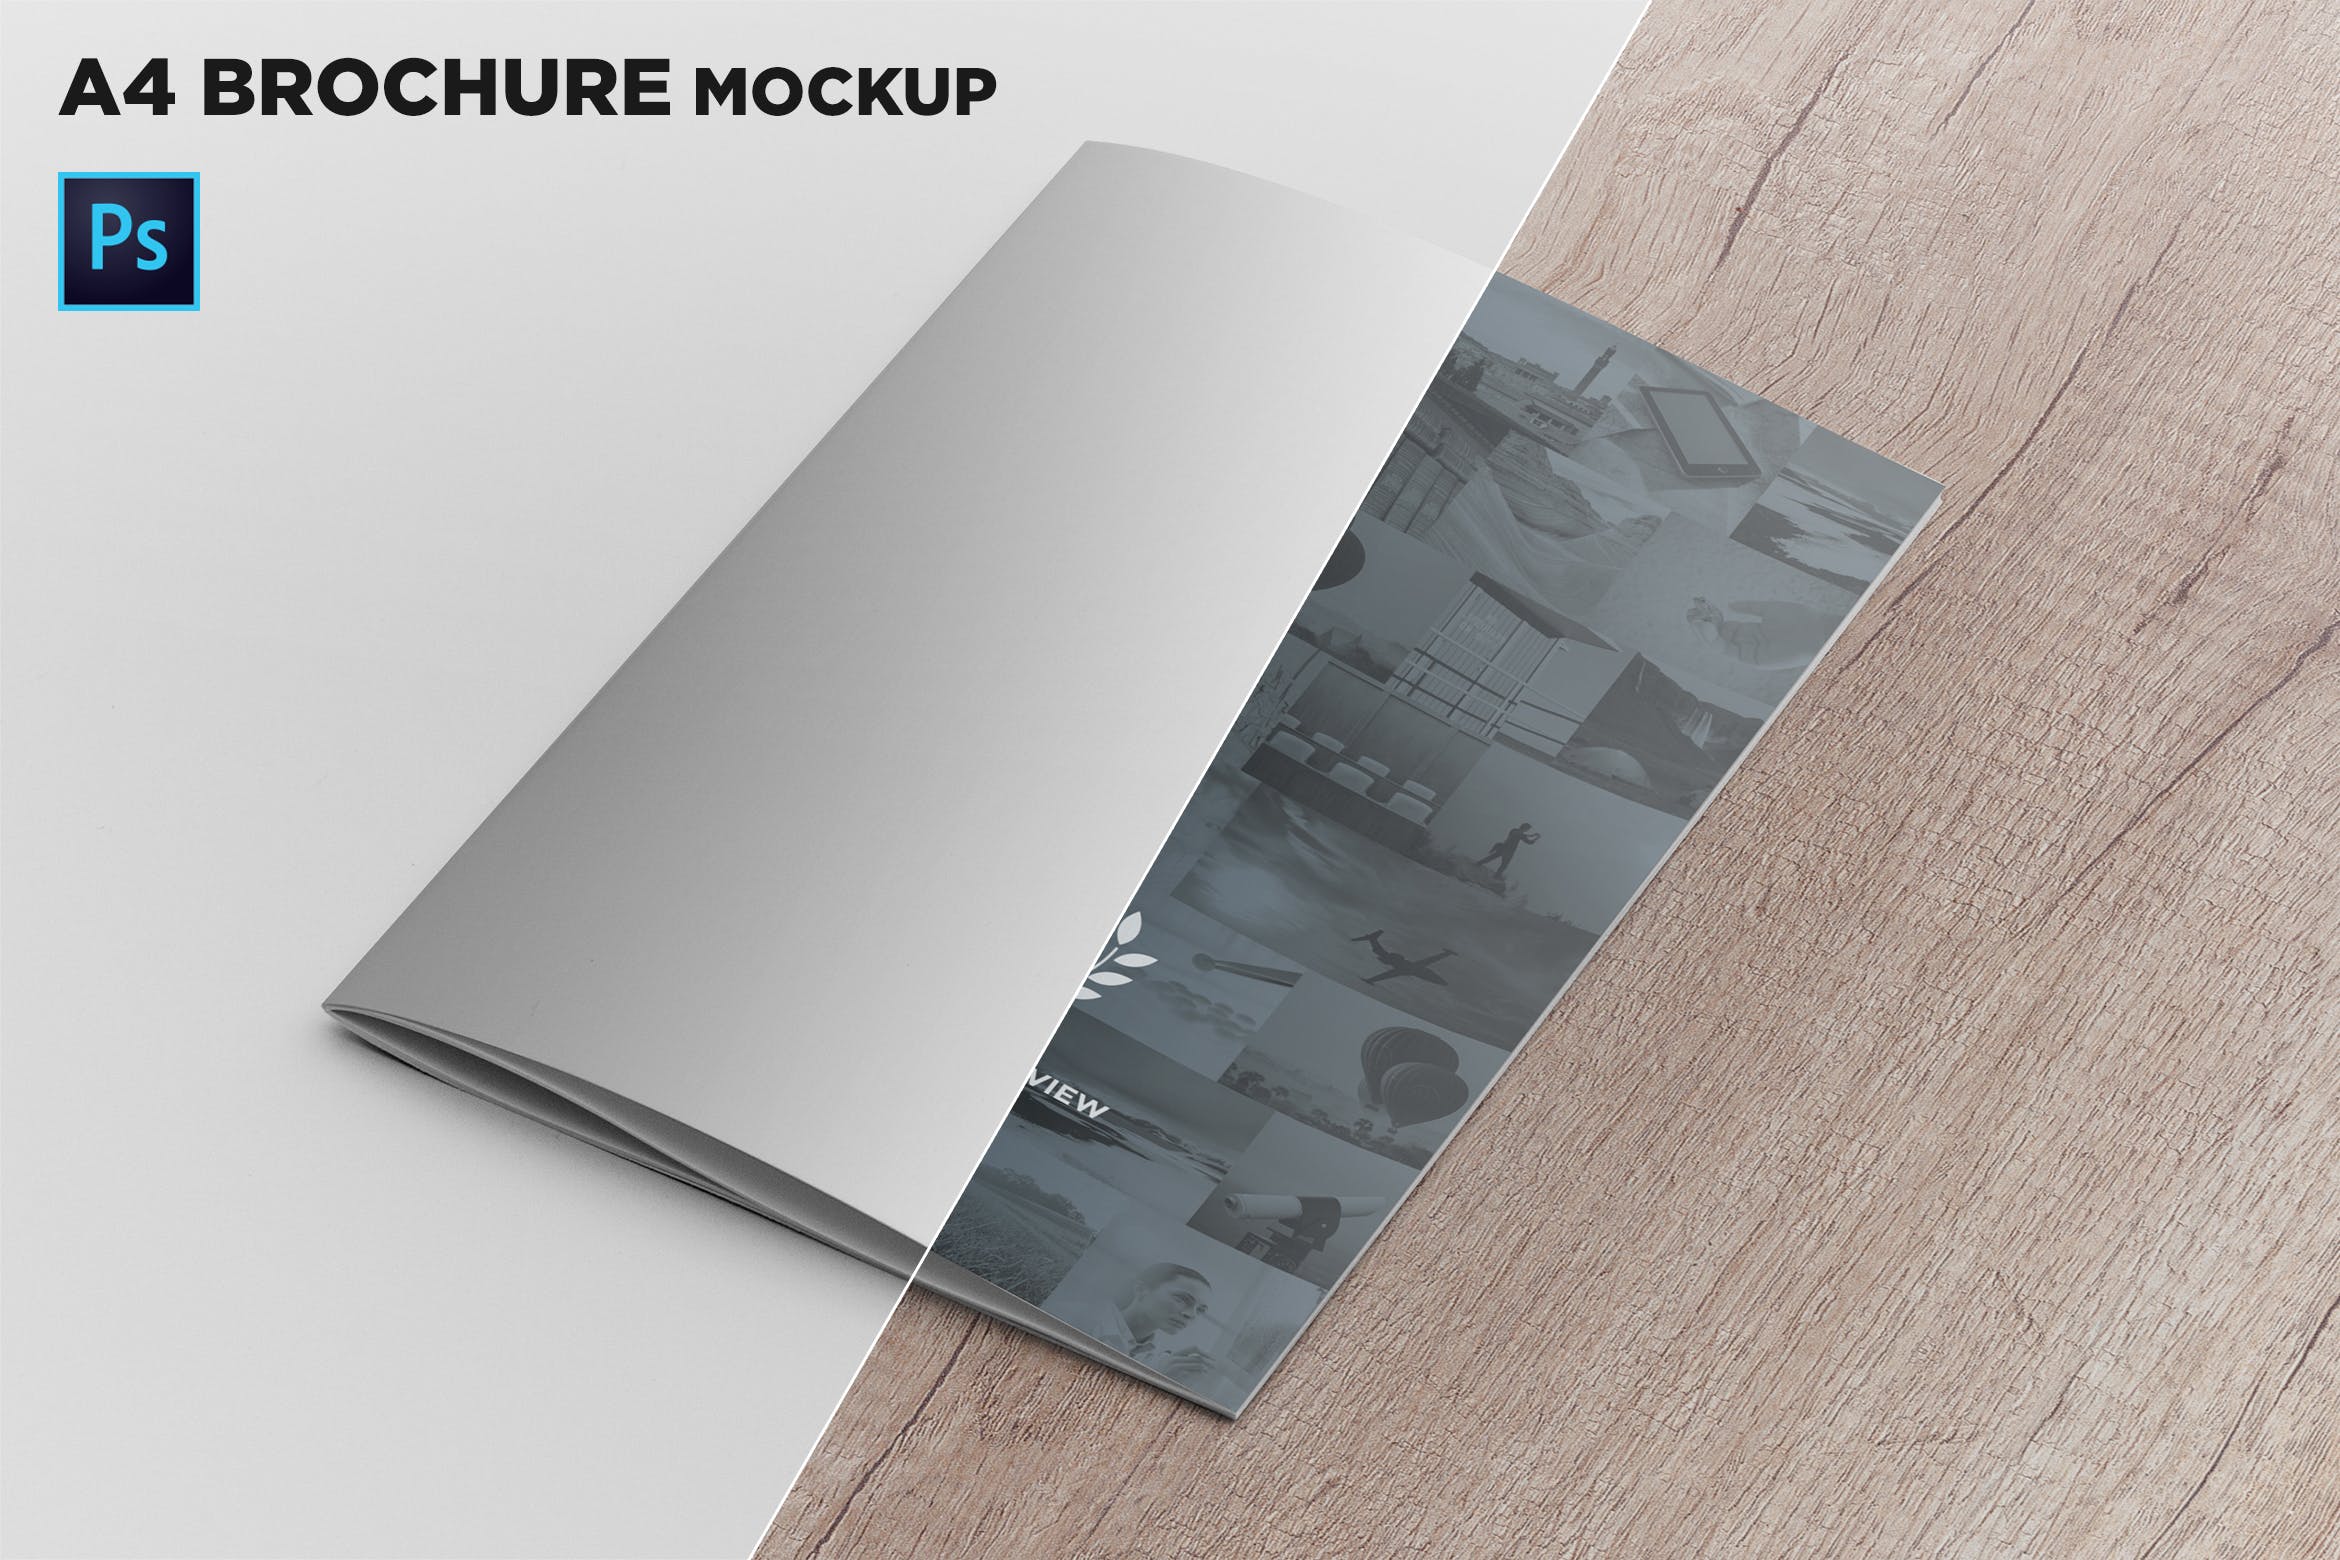 A4尺寸企业/品牌宣传册封面效果图样机蚂蚁素材精选模板 A4 Brochure Cover Mockup Perspective View插图